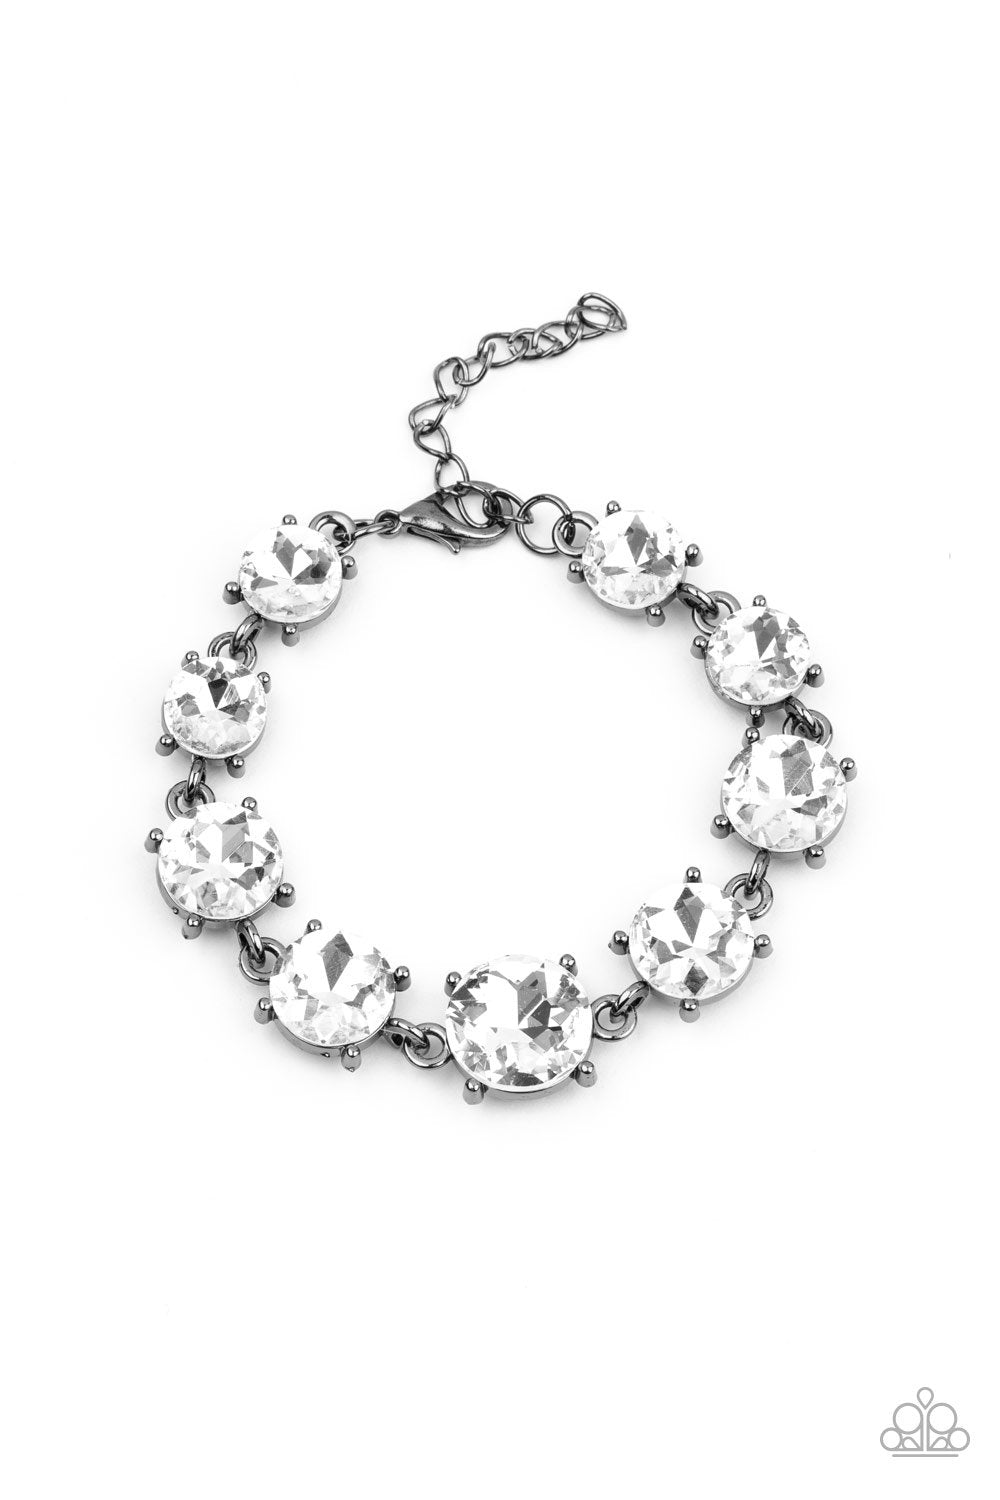 Can't Believe My ICE Gunmetal Black and White Rhinestone Bracelet - Paparazzi Accessories-CarasShop.com - $5 Jewelry by Cara Jewels